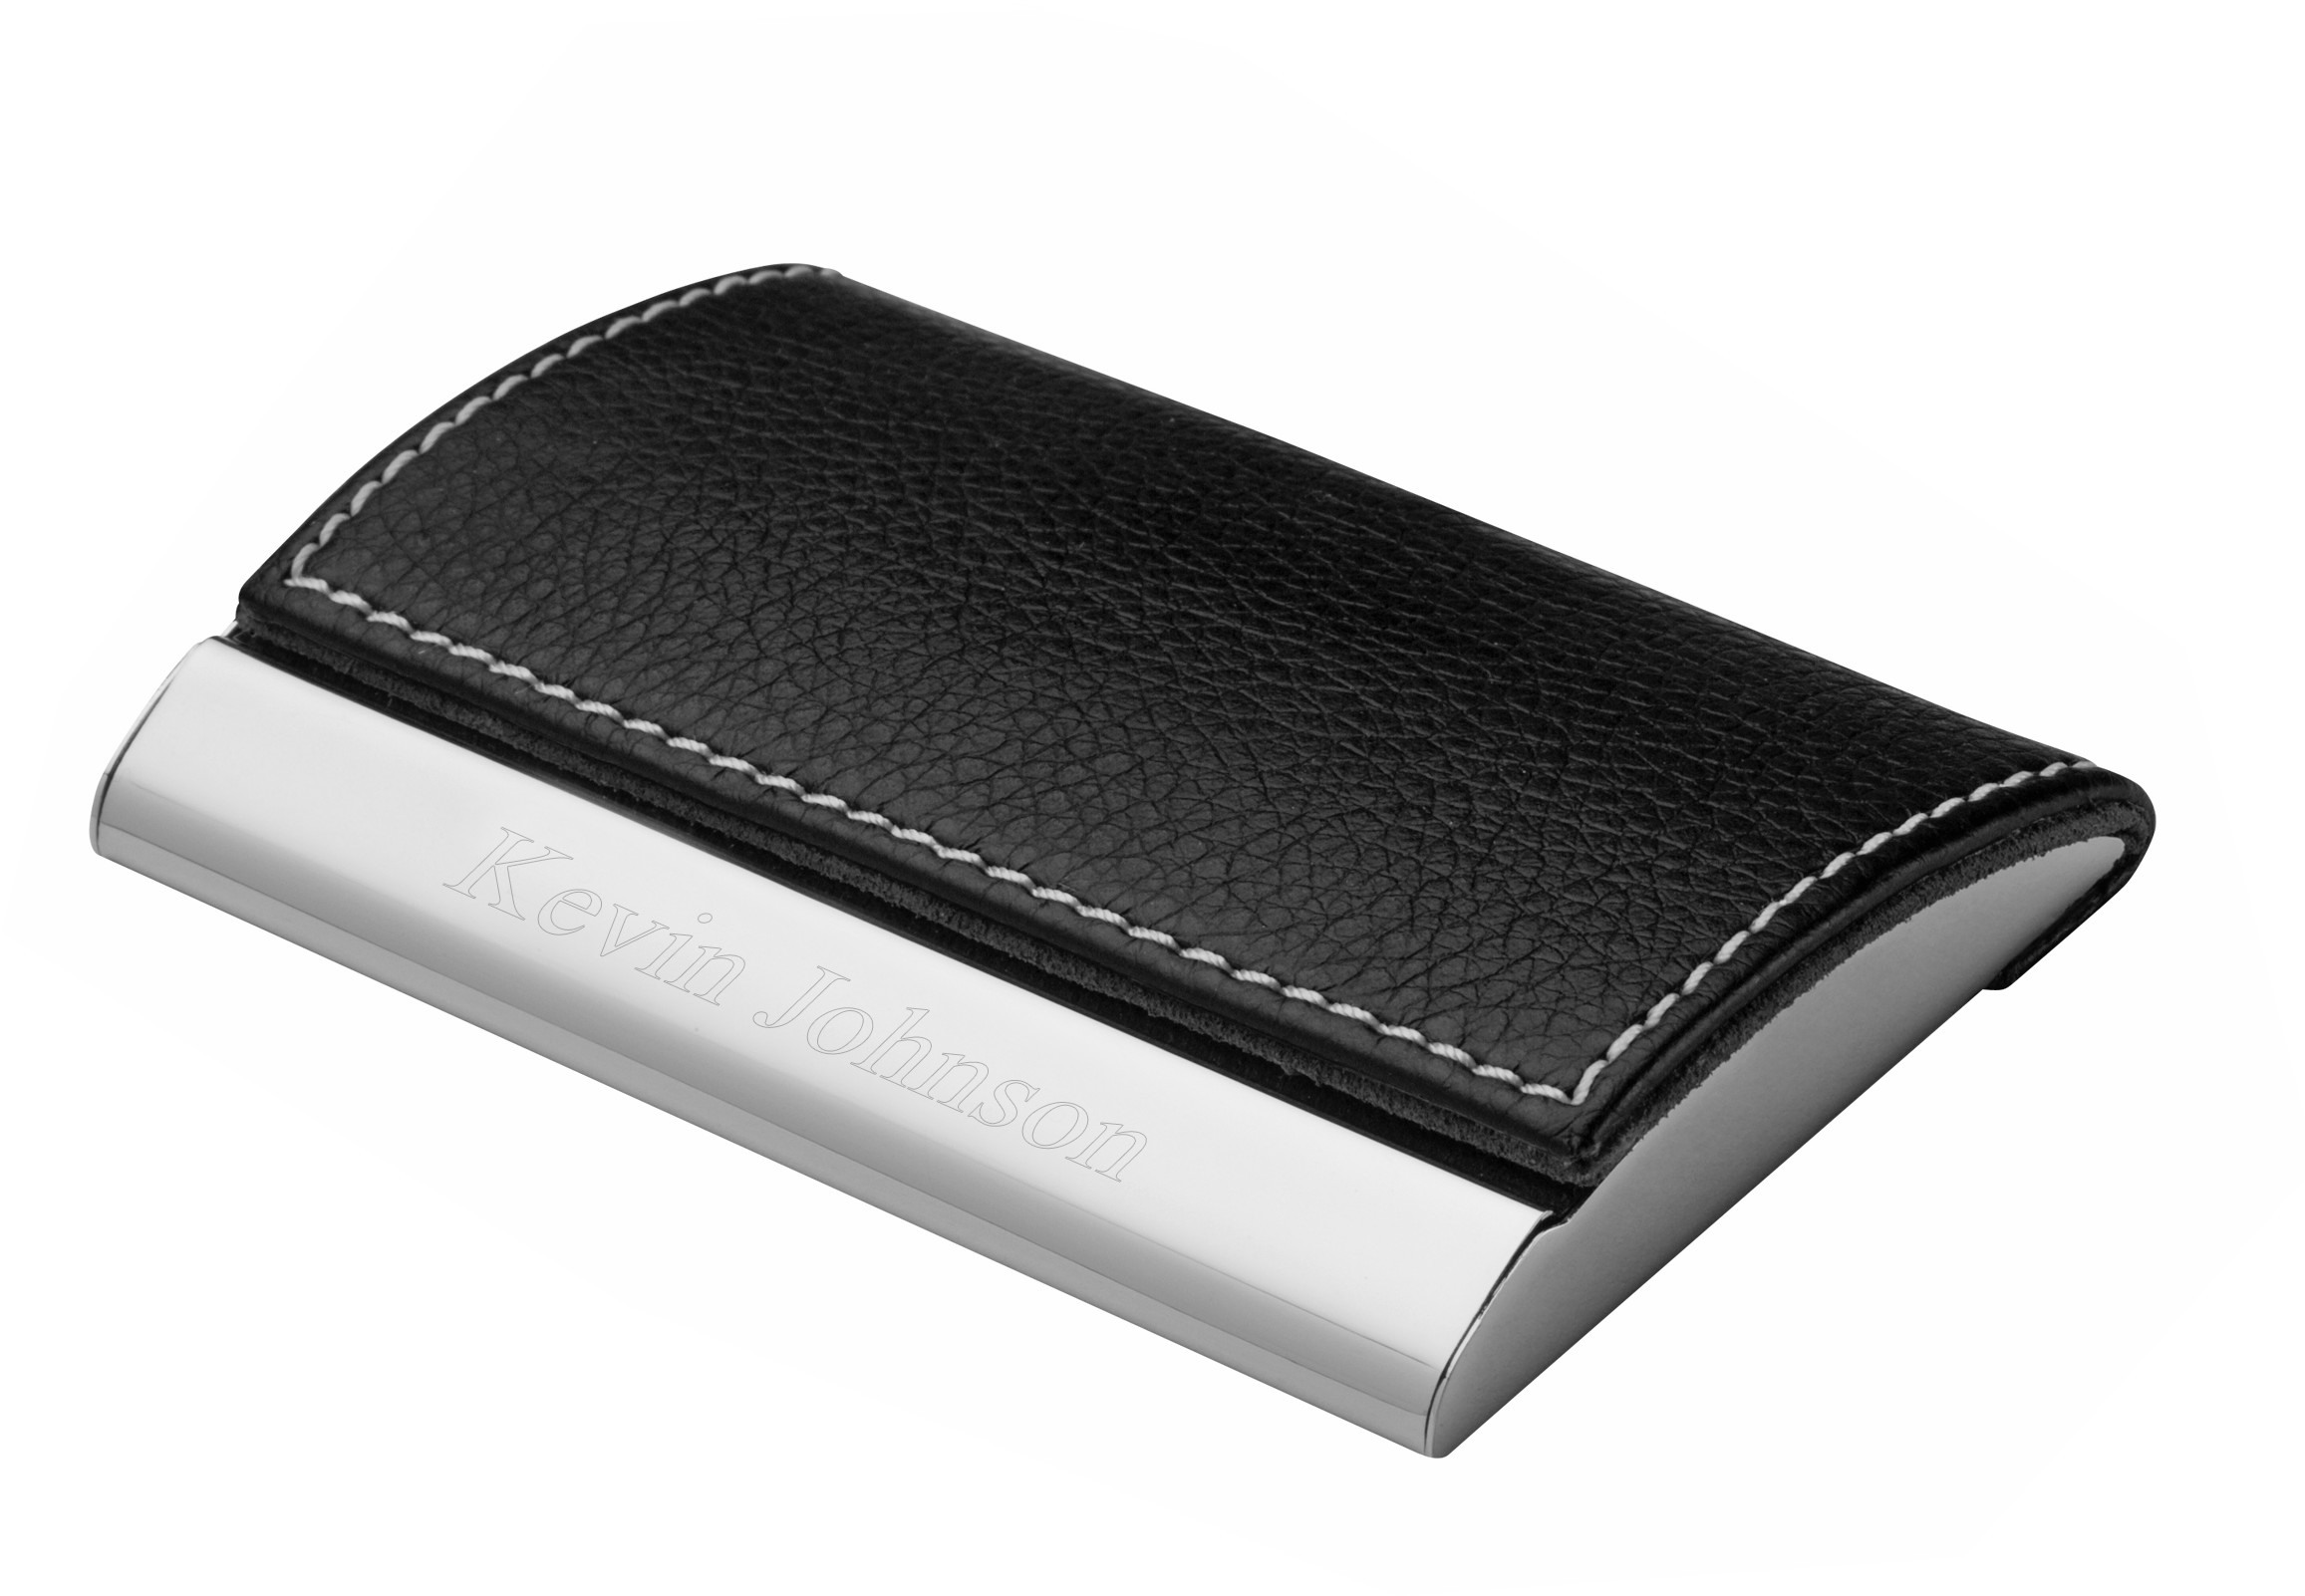 HansonEllis Executive Magnetic Leather Credit Card & Money Clip